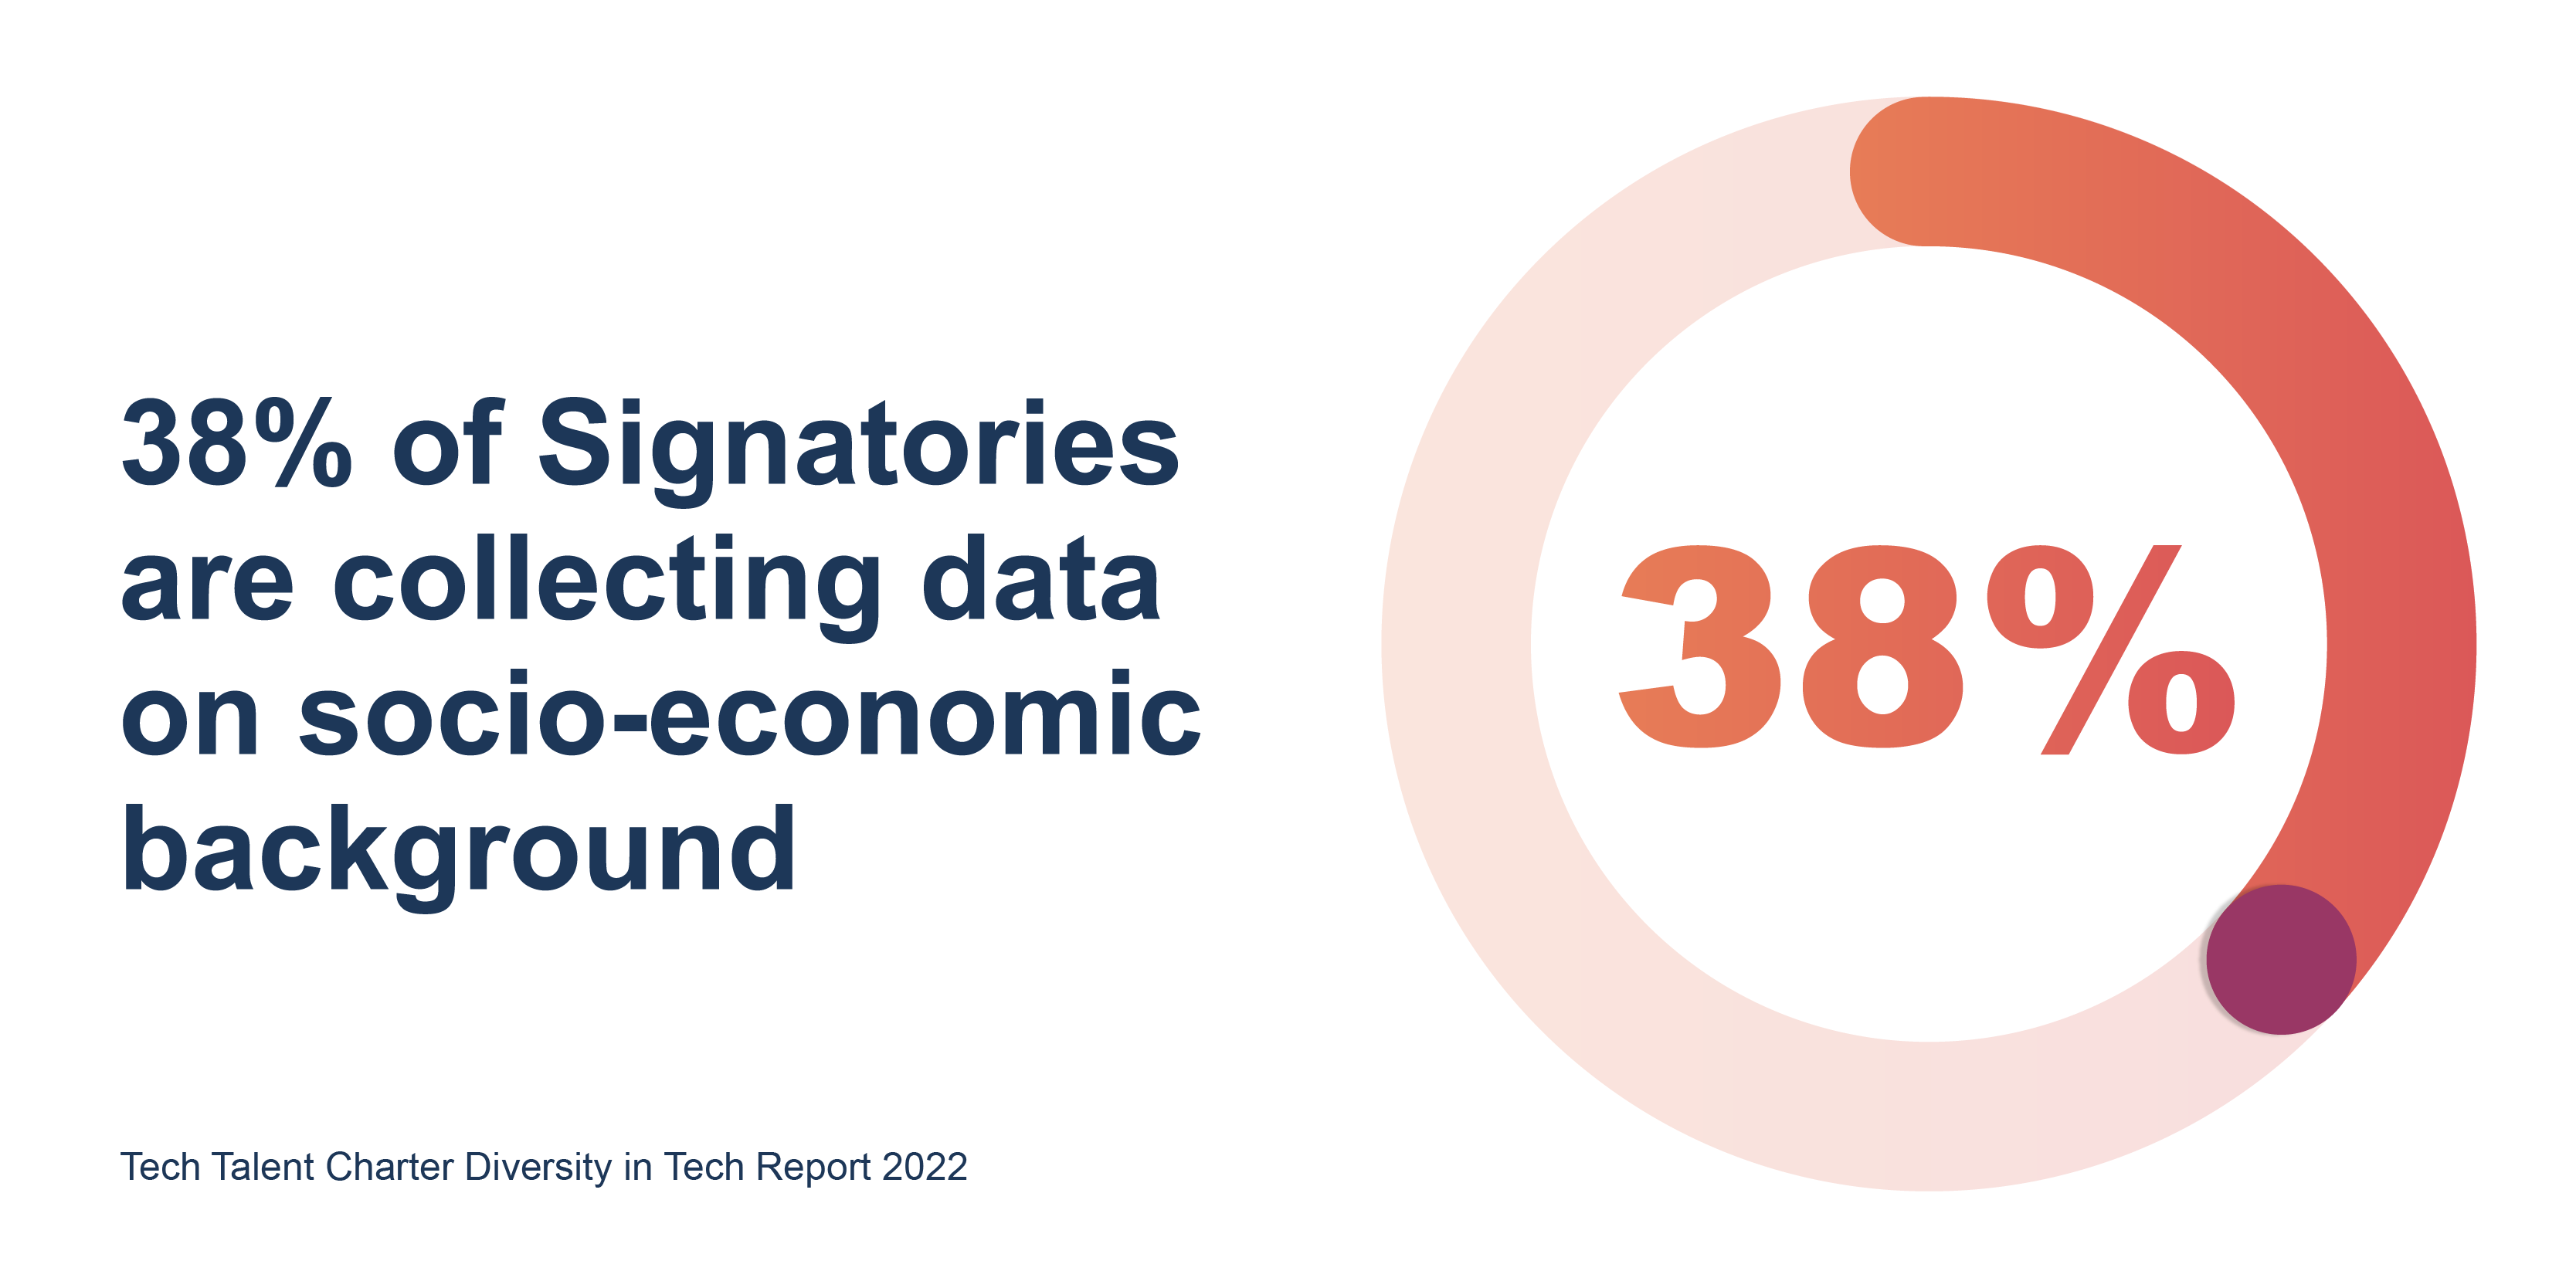 38% of Signatories are collecting data on socio-economic background.